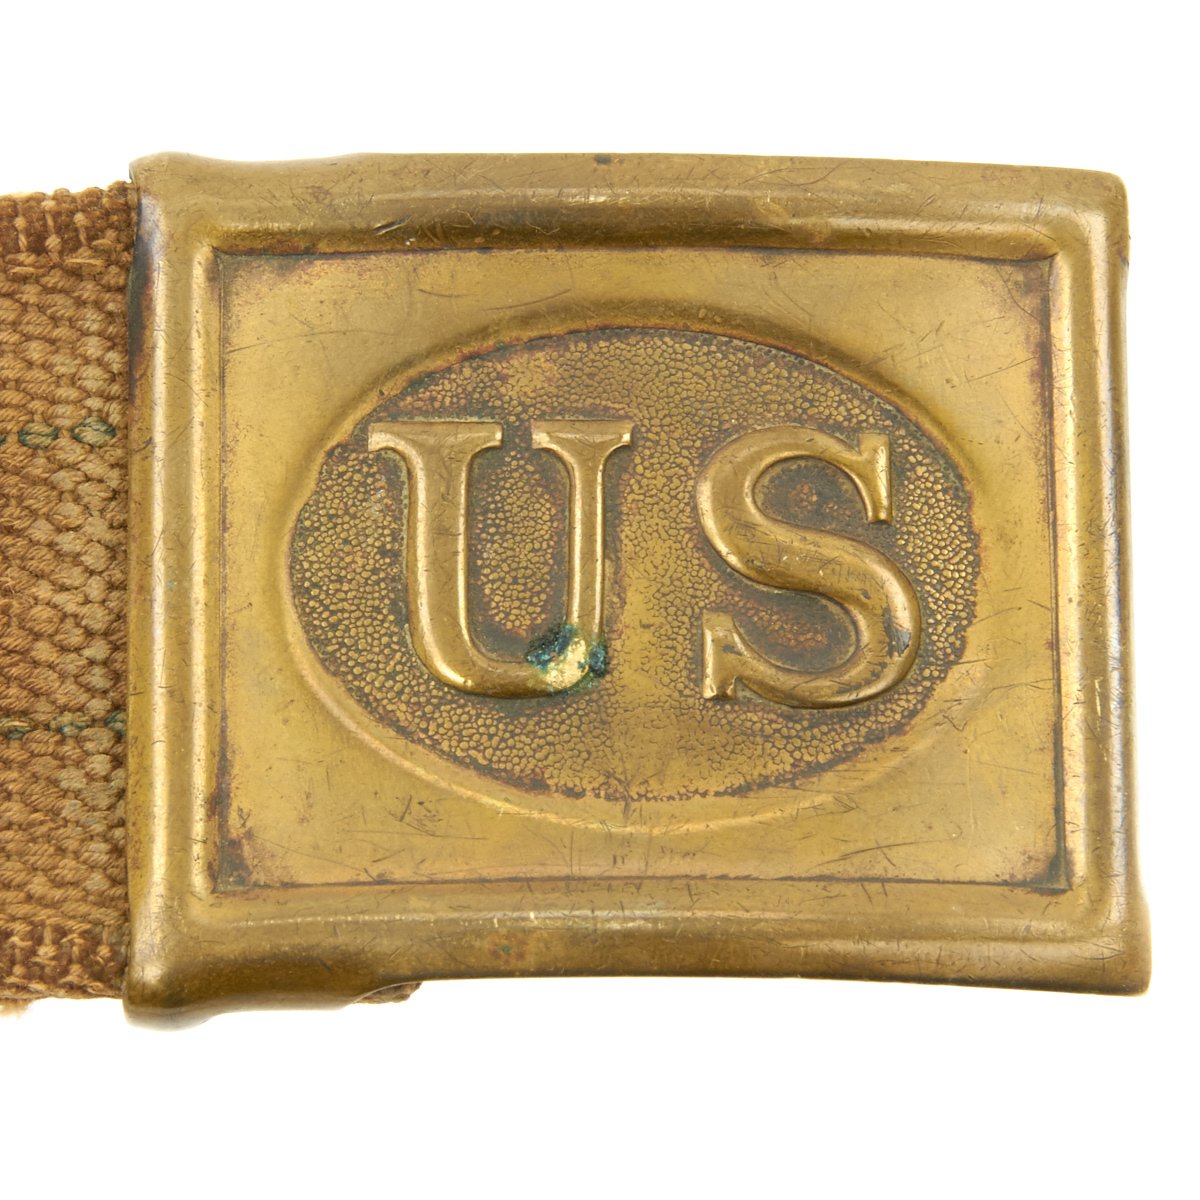 Lot - U.S. Civil War/Indian Wars Era Leather Belt with buckle